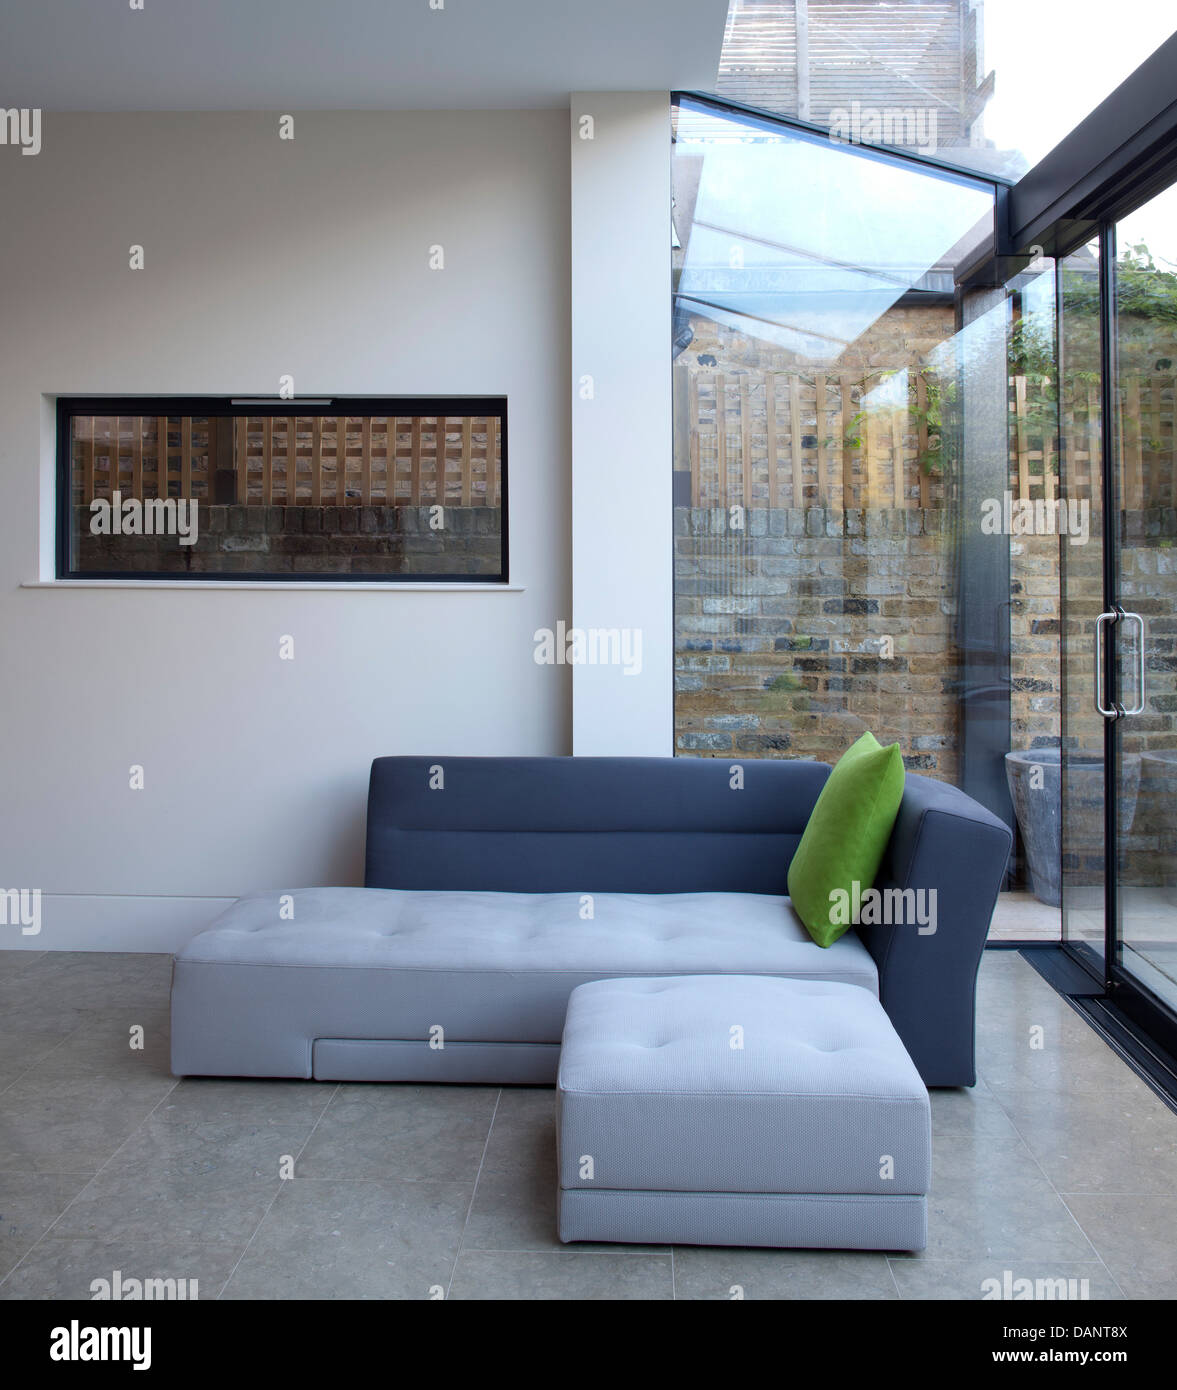 Dents Road, London, United Kingdom. Architect: h2 Architecture, 2012. L-shaped sofa in glazed conversion. Stock Photo